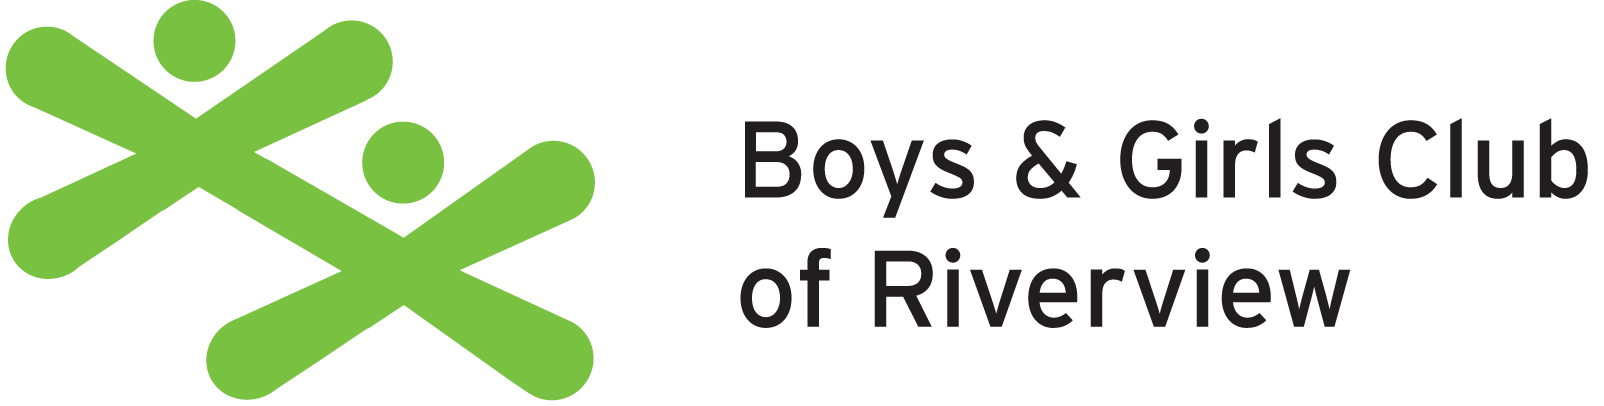 Boys and Girls Club Logo - Boys & Girls Club of Riverview